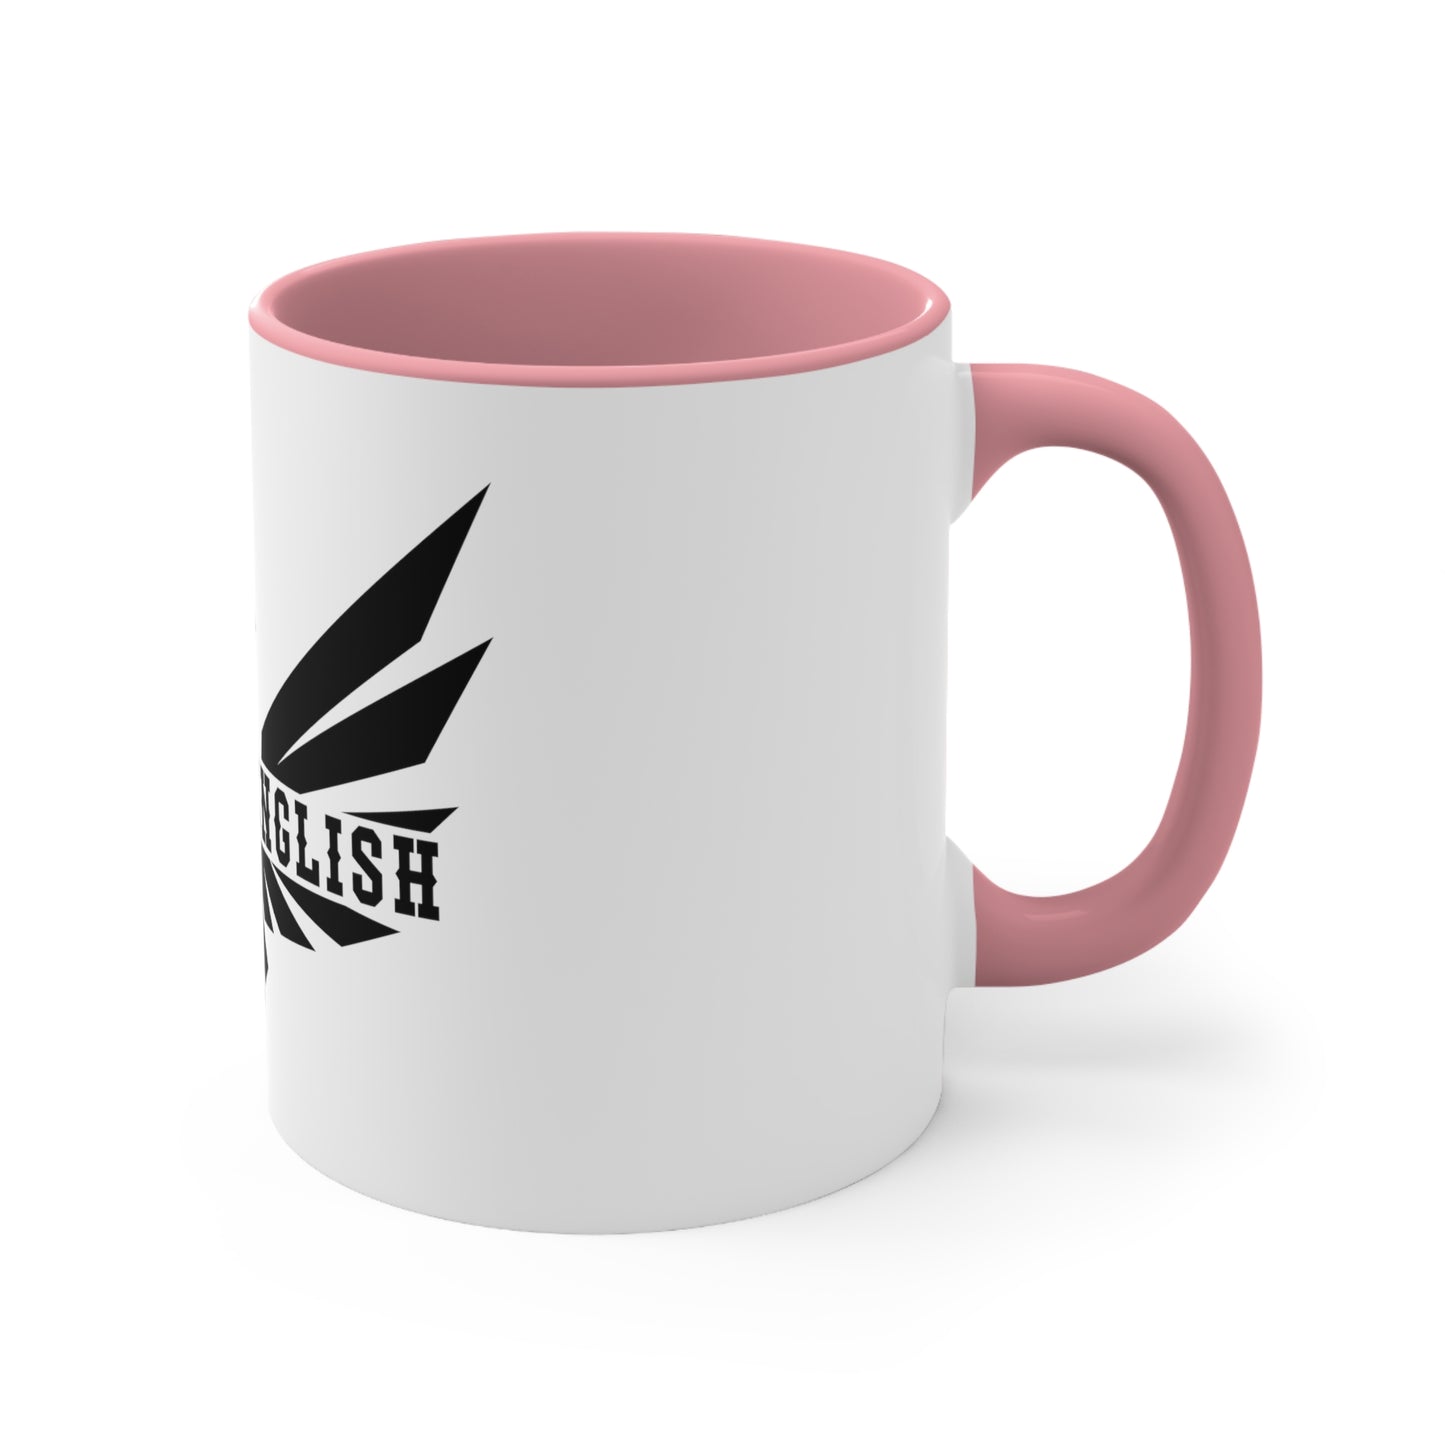 FLUENT COFFEE MUG Accent Coffee Mug, 11oz